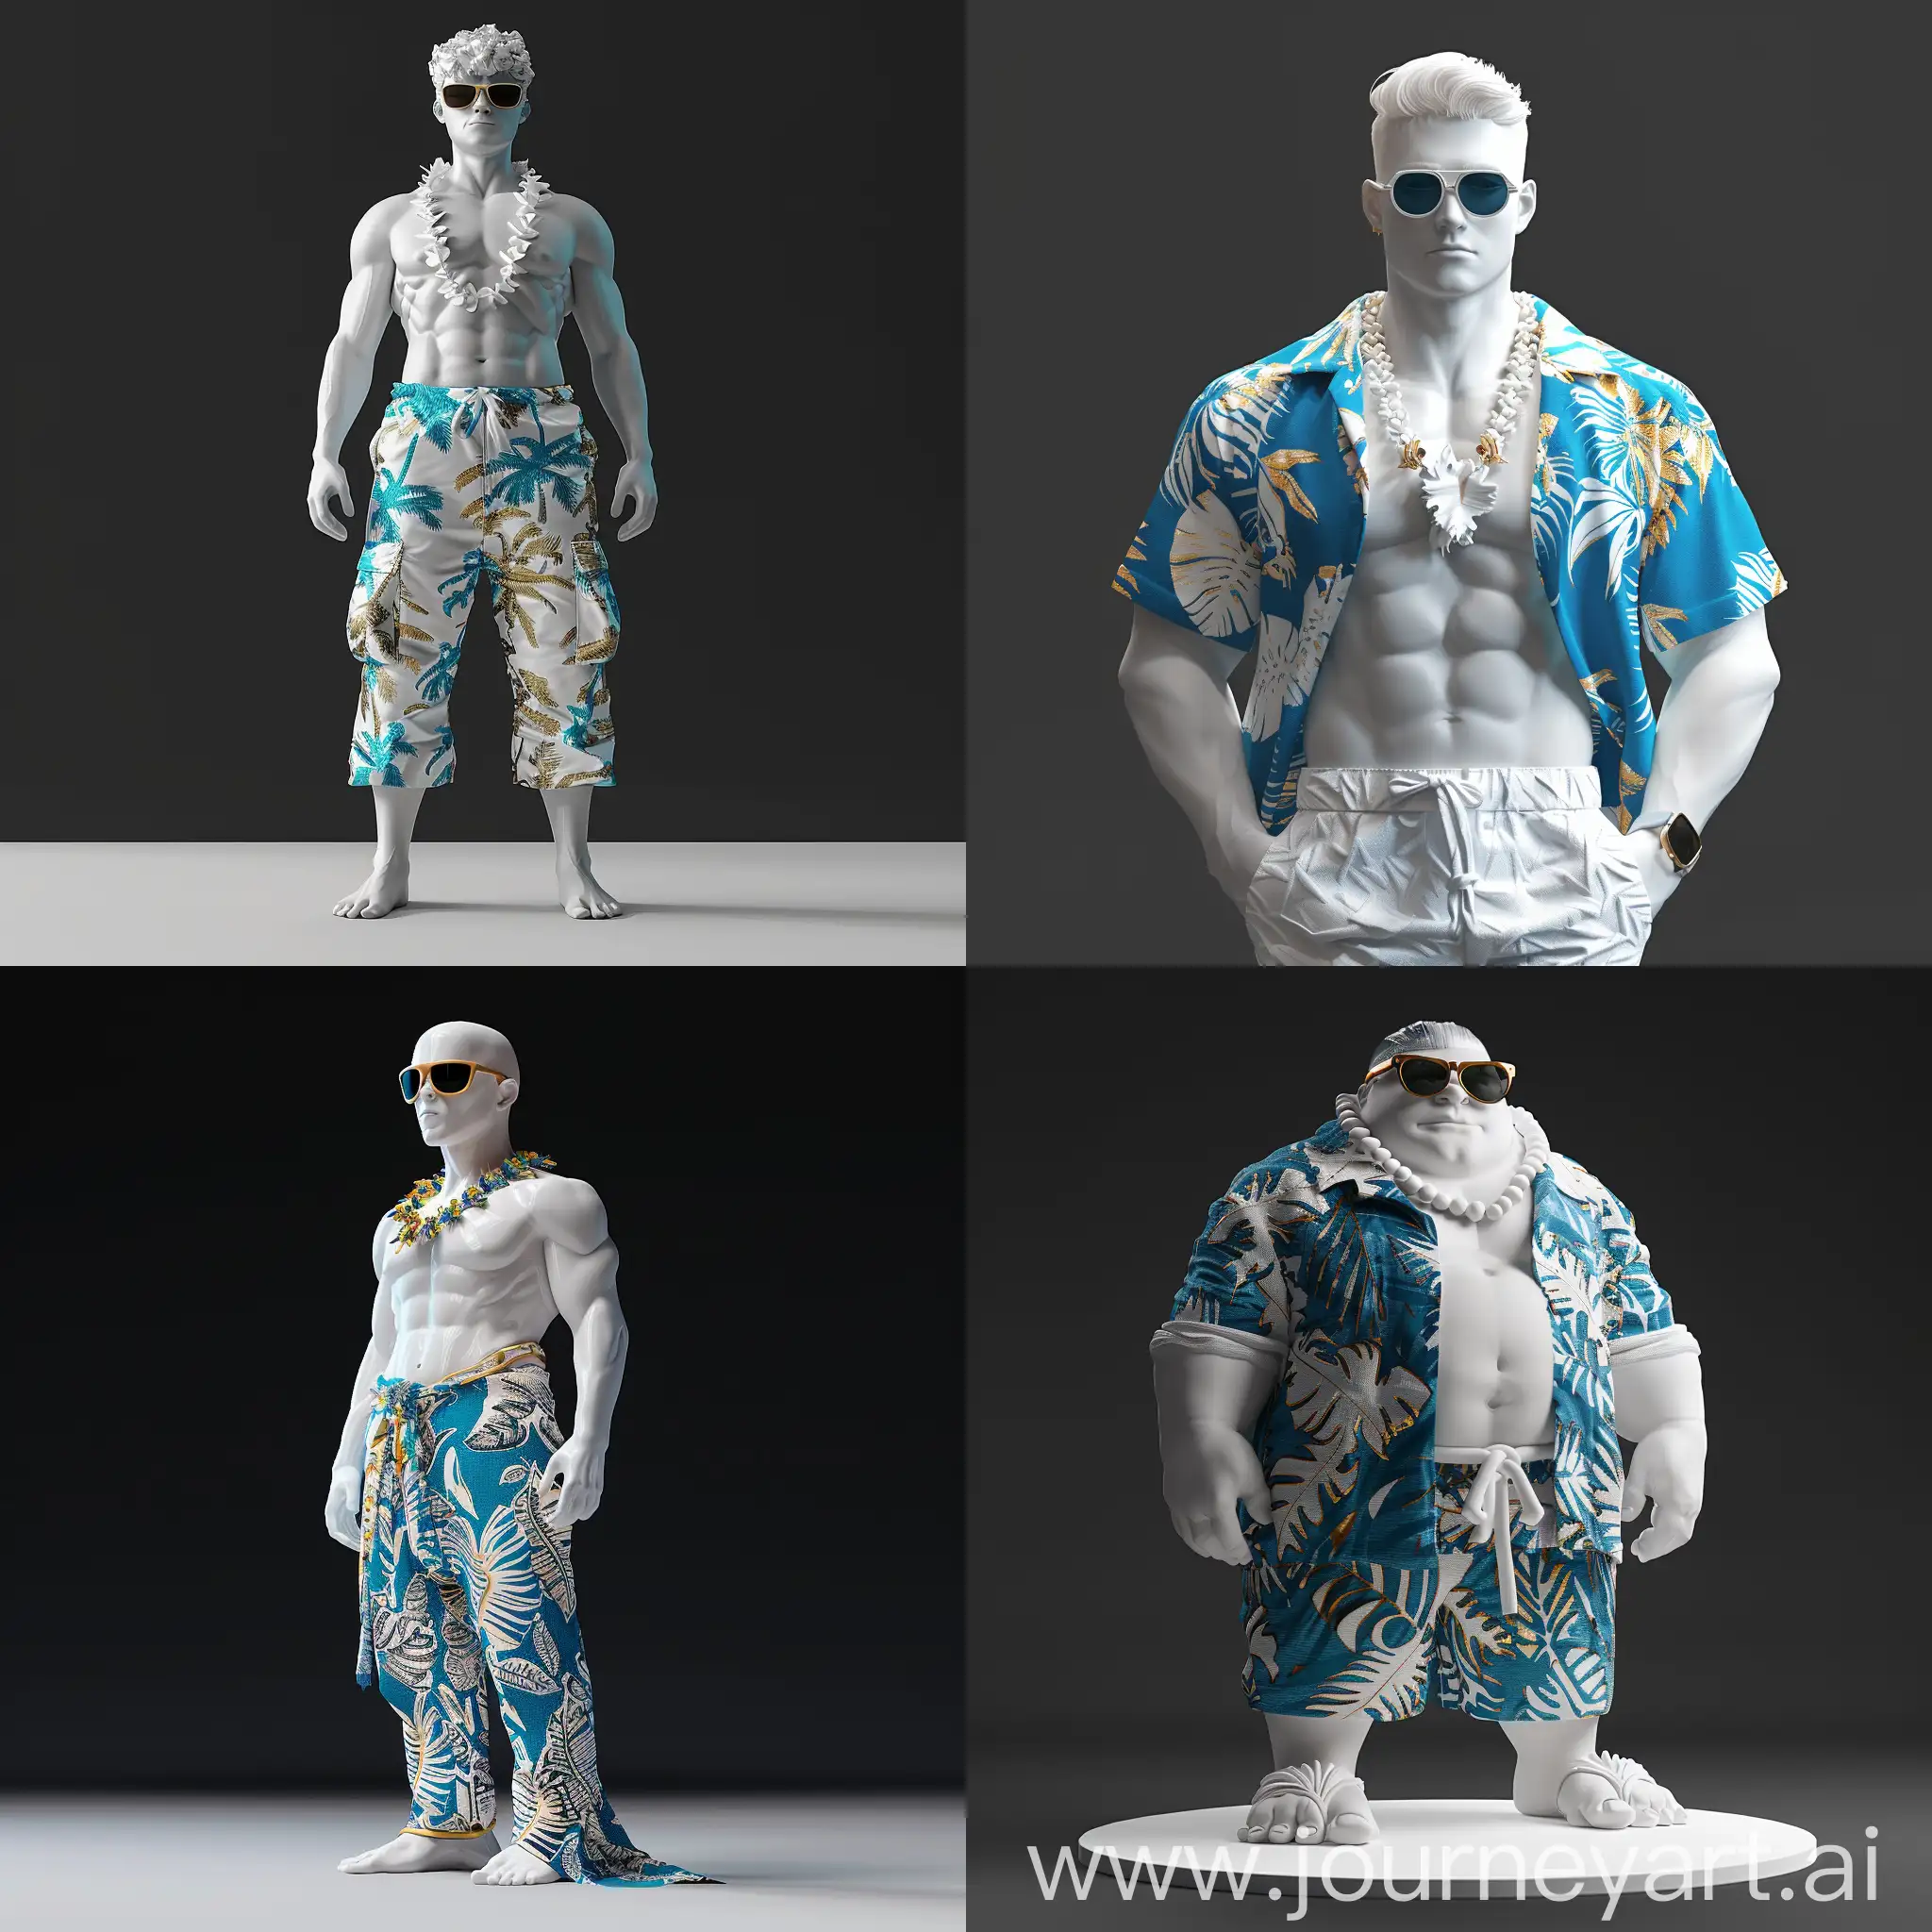 Minimalist-White-Man-in-Hawaiian-Attire-and-Sunglasses-on-Black-Background